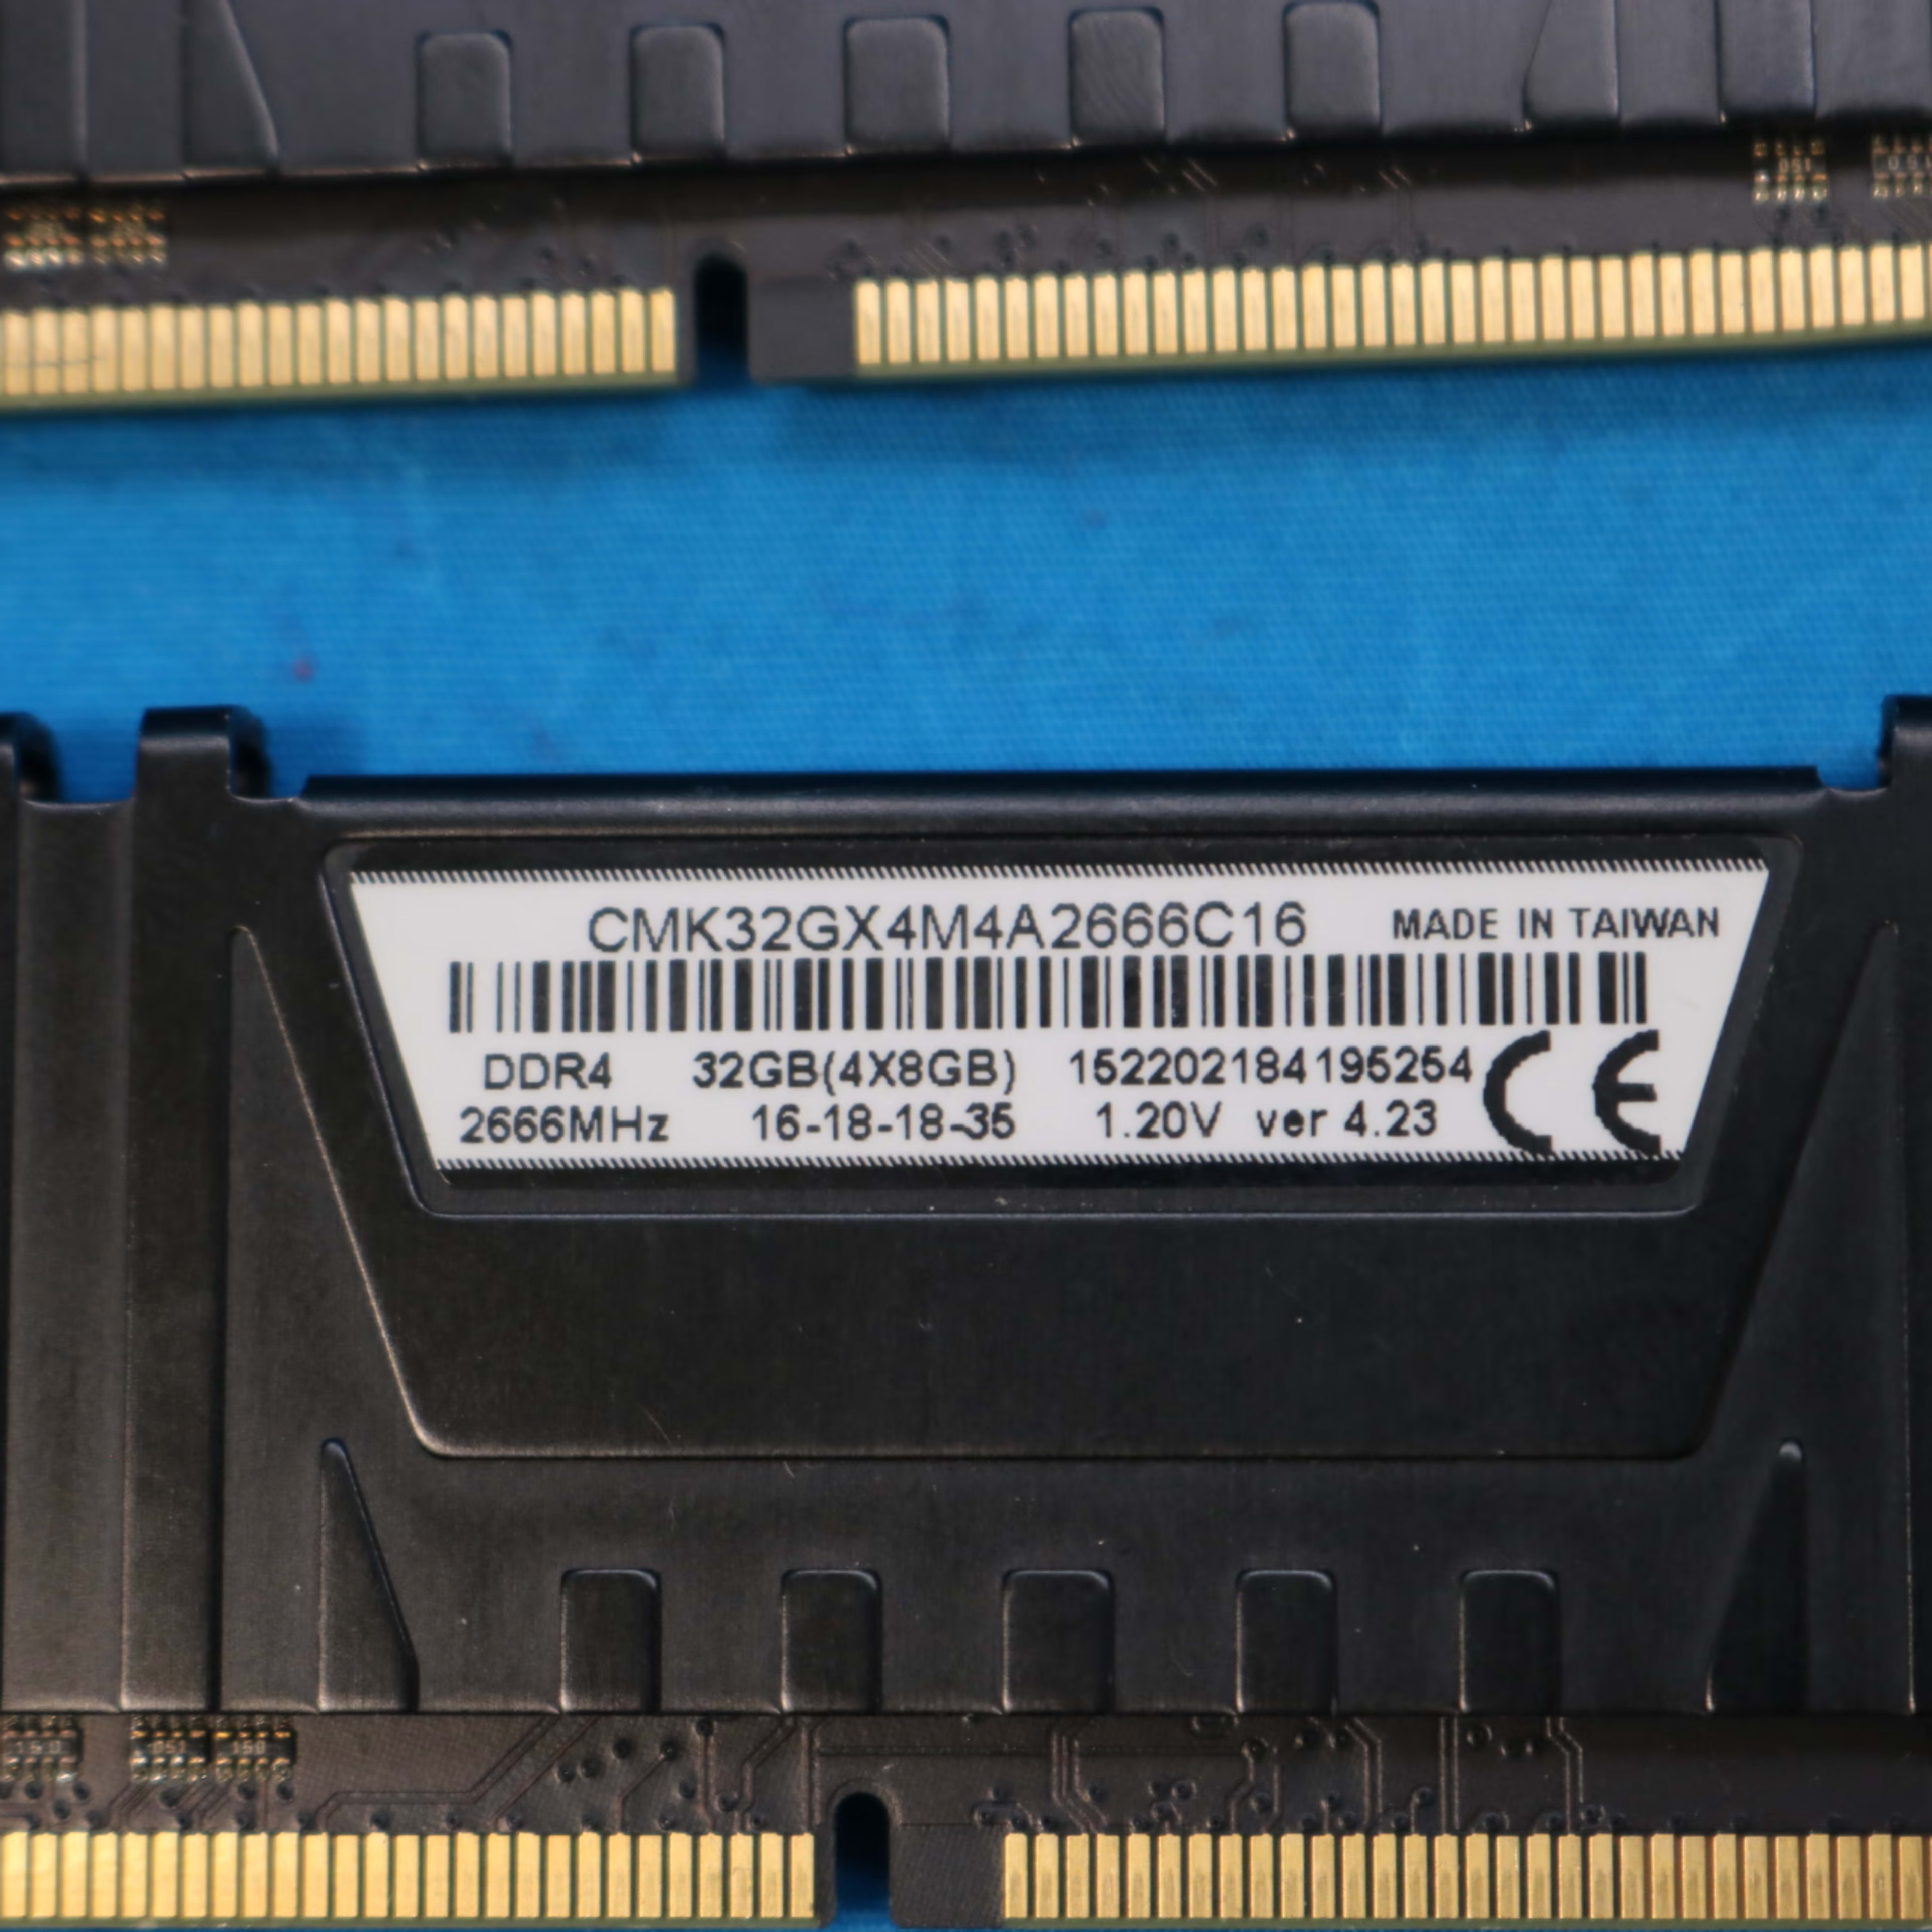 Corsair Vengeance LPX 32GB (4x8GB) DDR4 2666MHz CL16 1.20V Desktop RAM CMK32GX4M4A2666C16 ver. 4.23